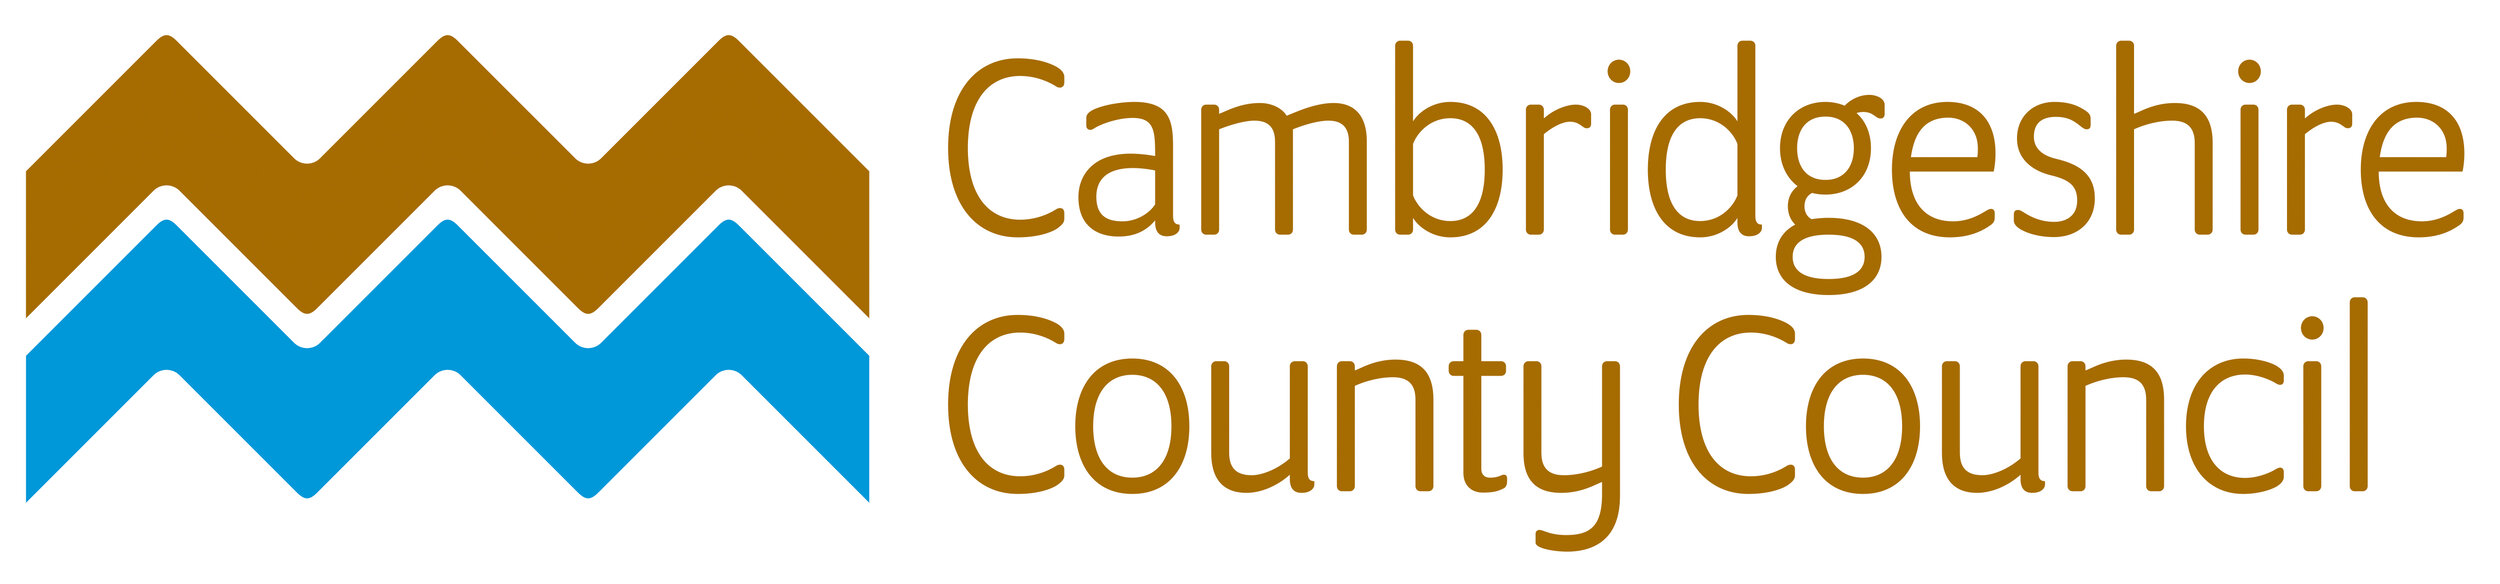 cambridge_cc_logo.jpg